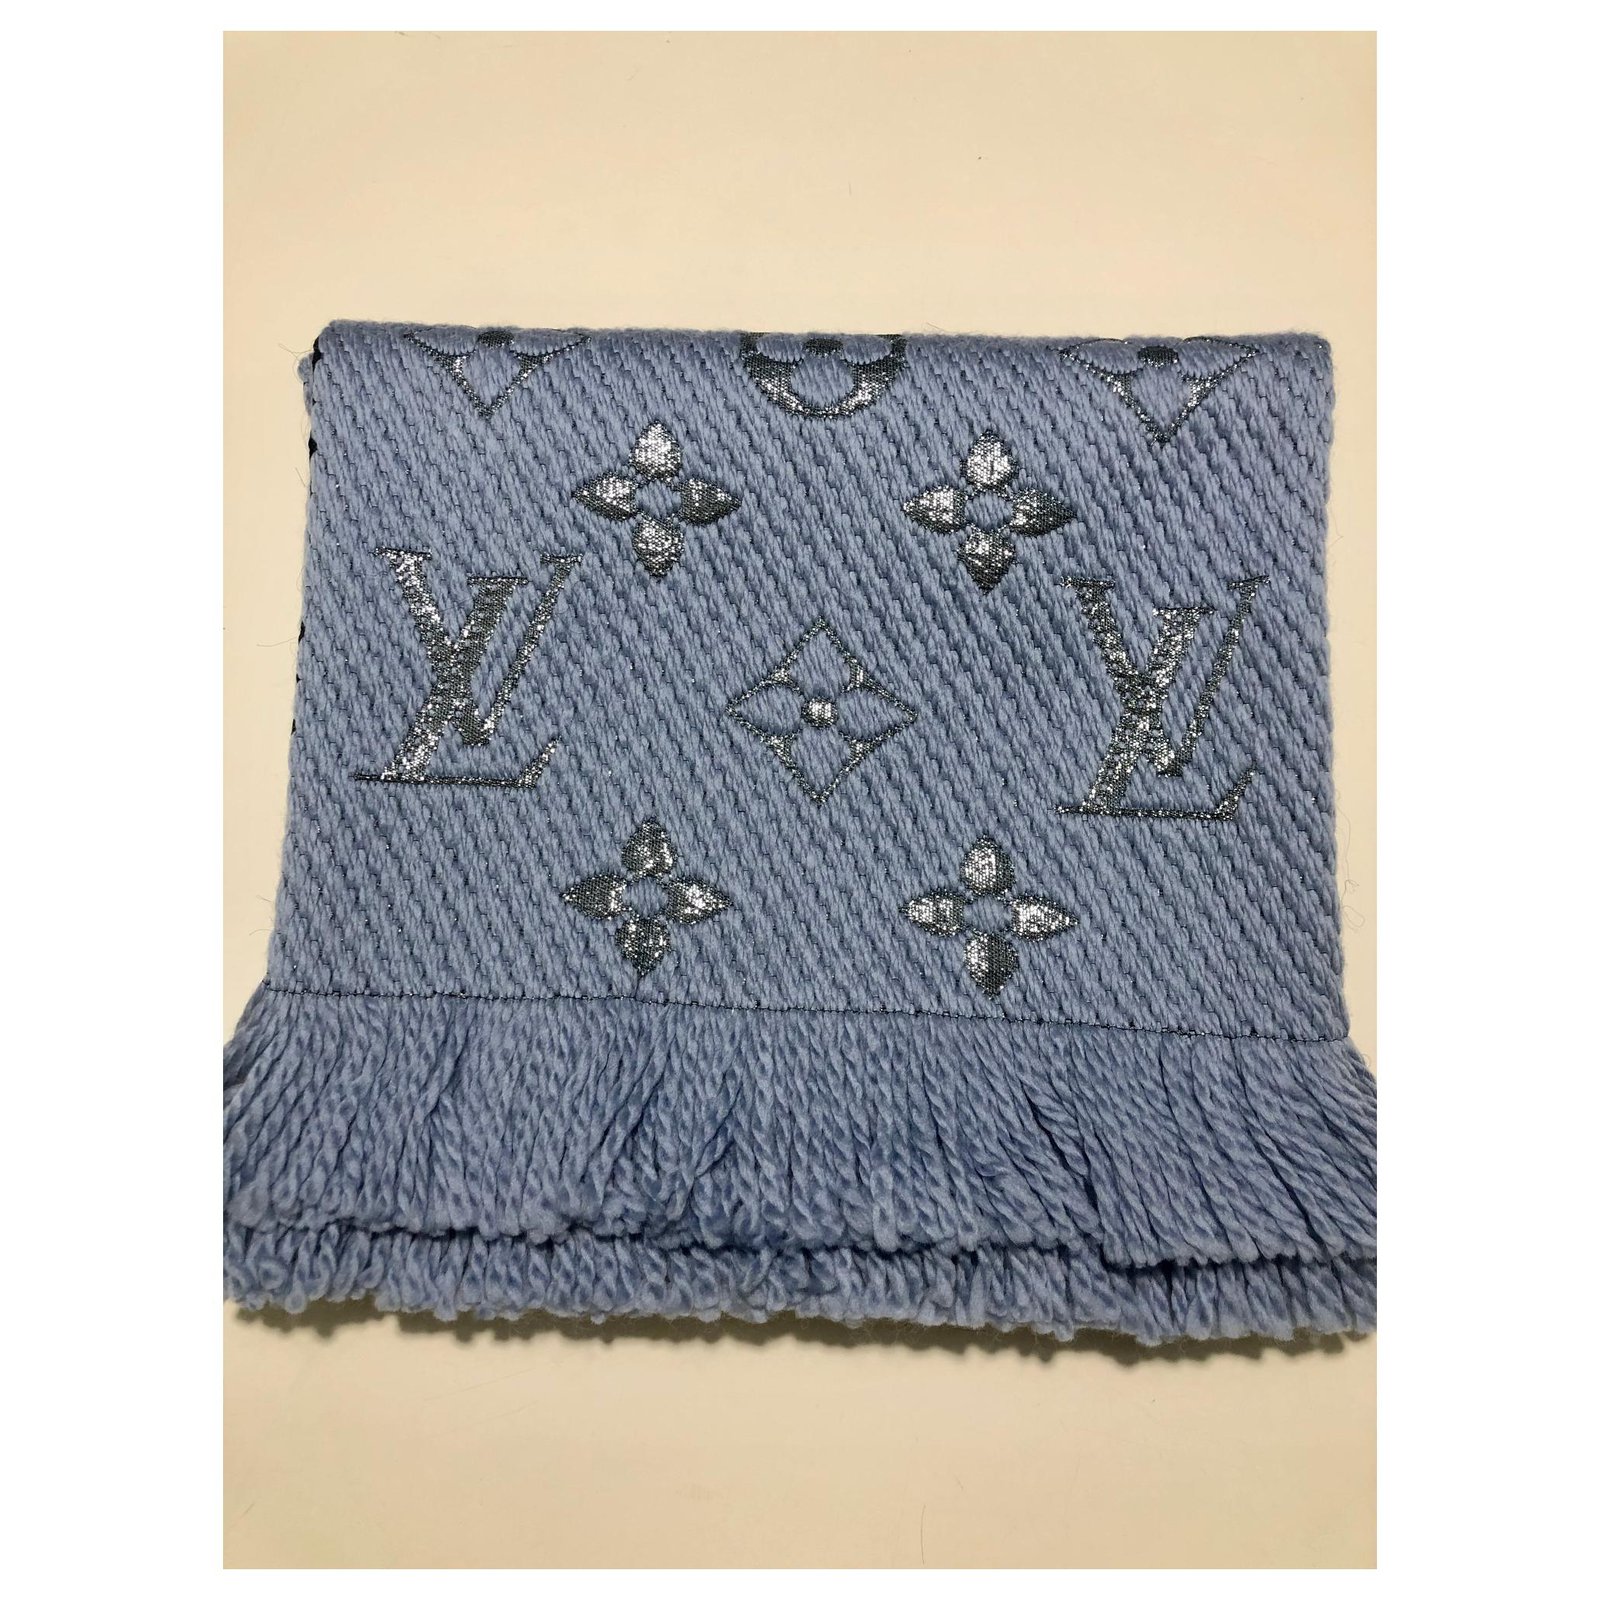 Louis Vuitton logomania shine scarf in blue – Lady Clara's Collection